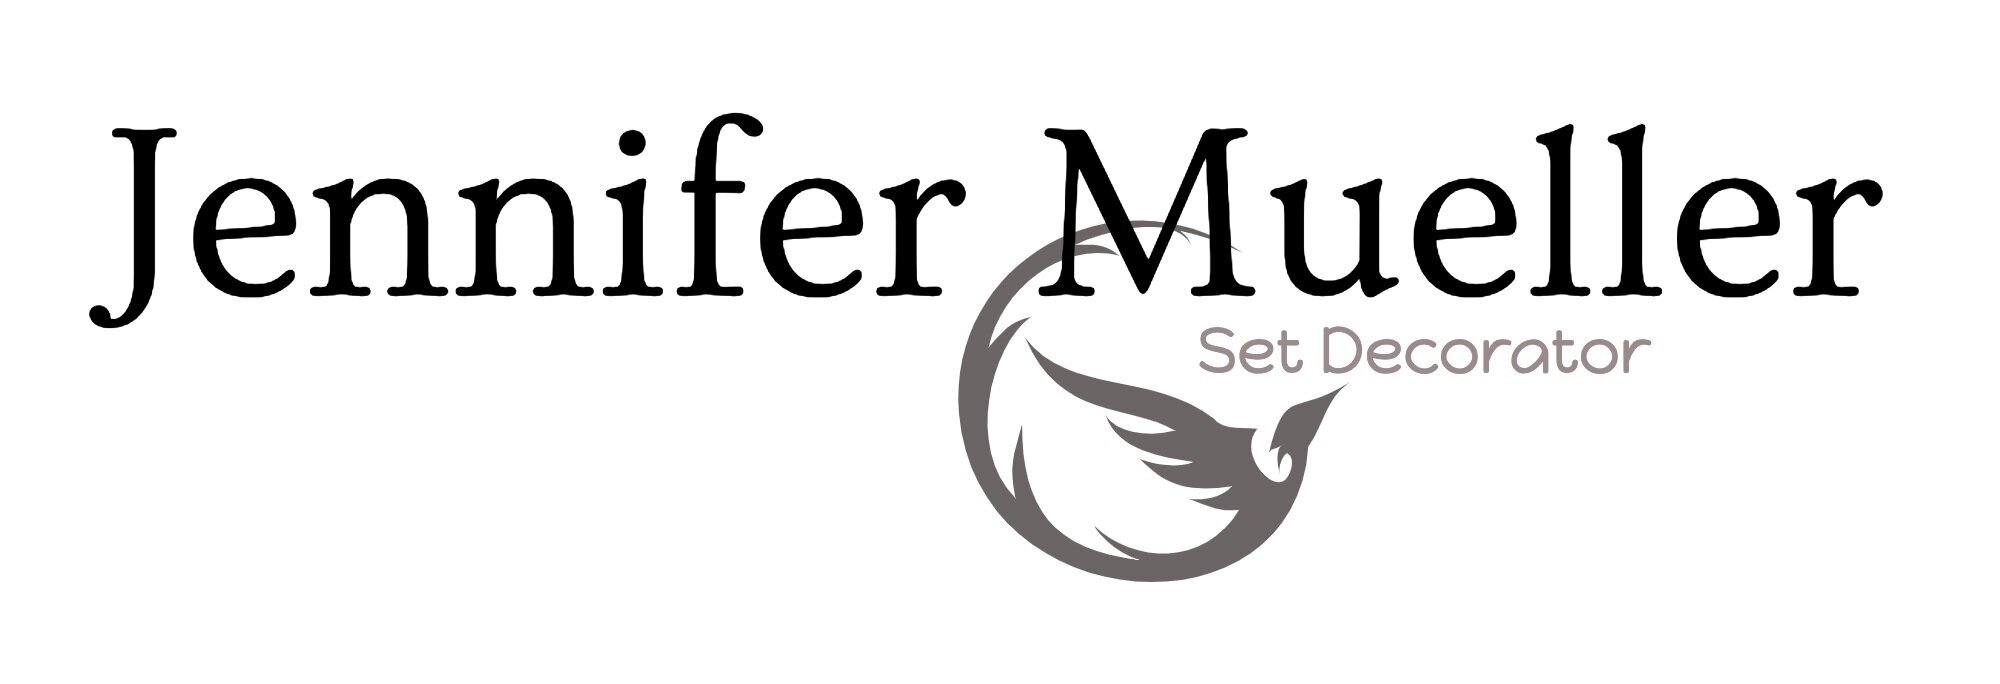 Jennifer Mueller - Set Decorator